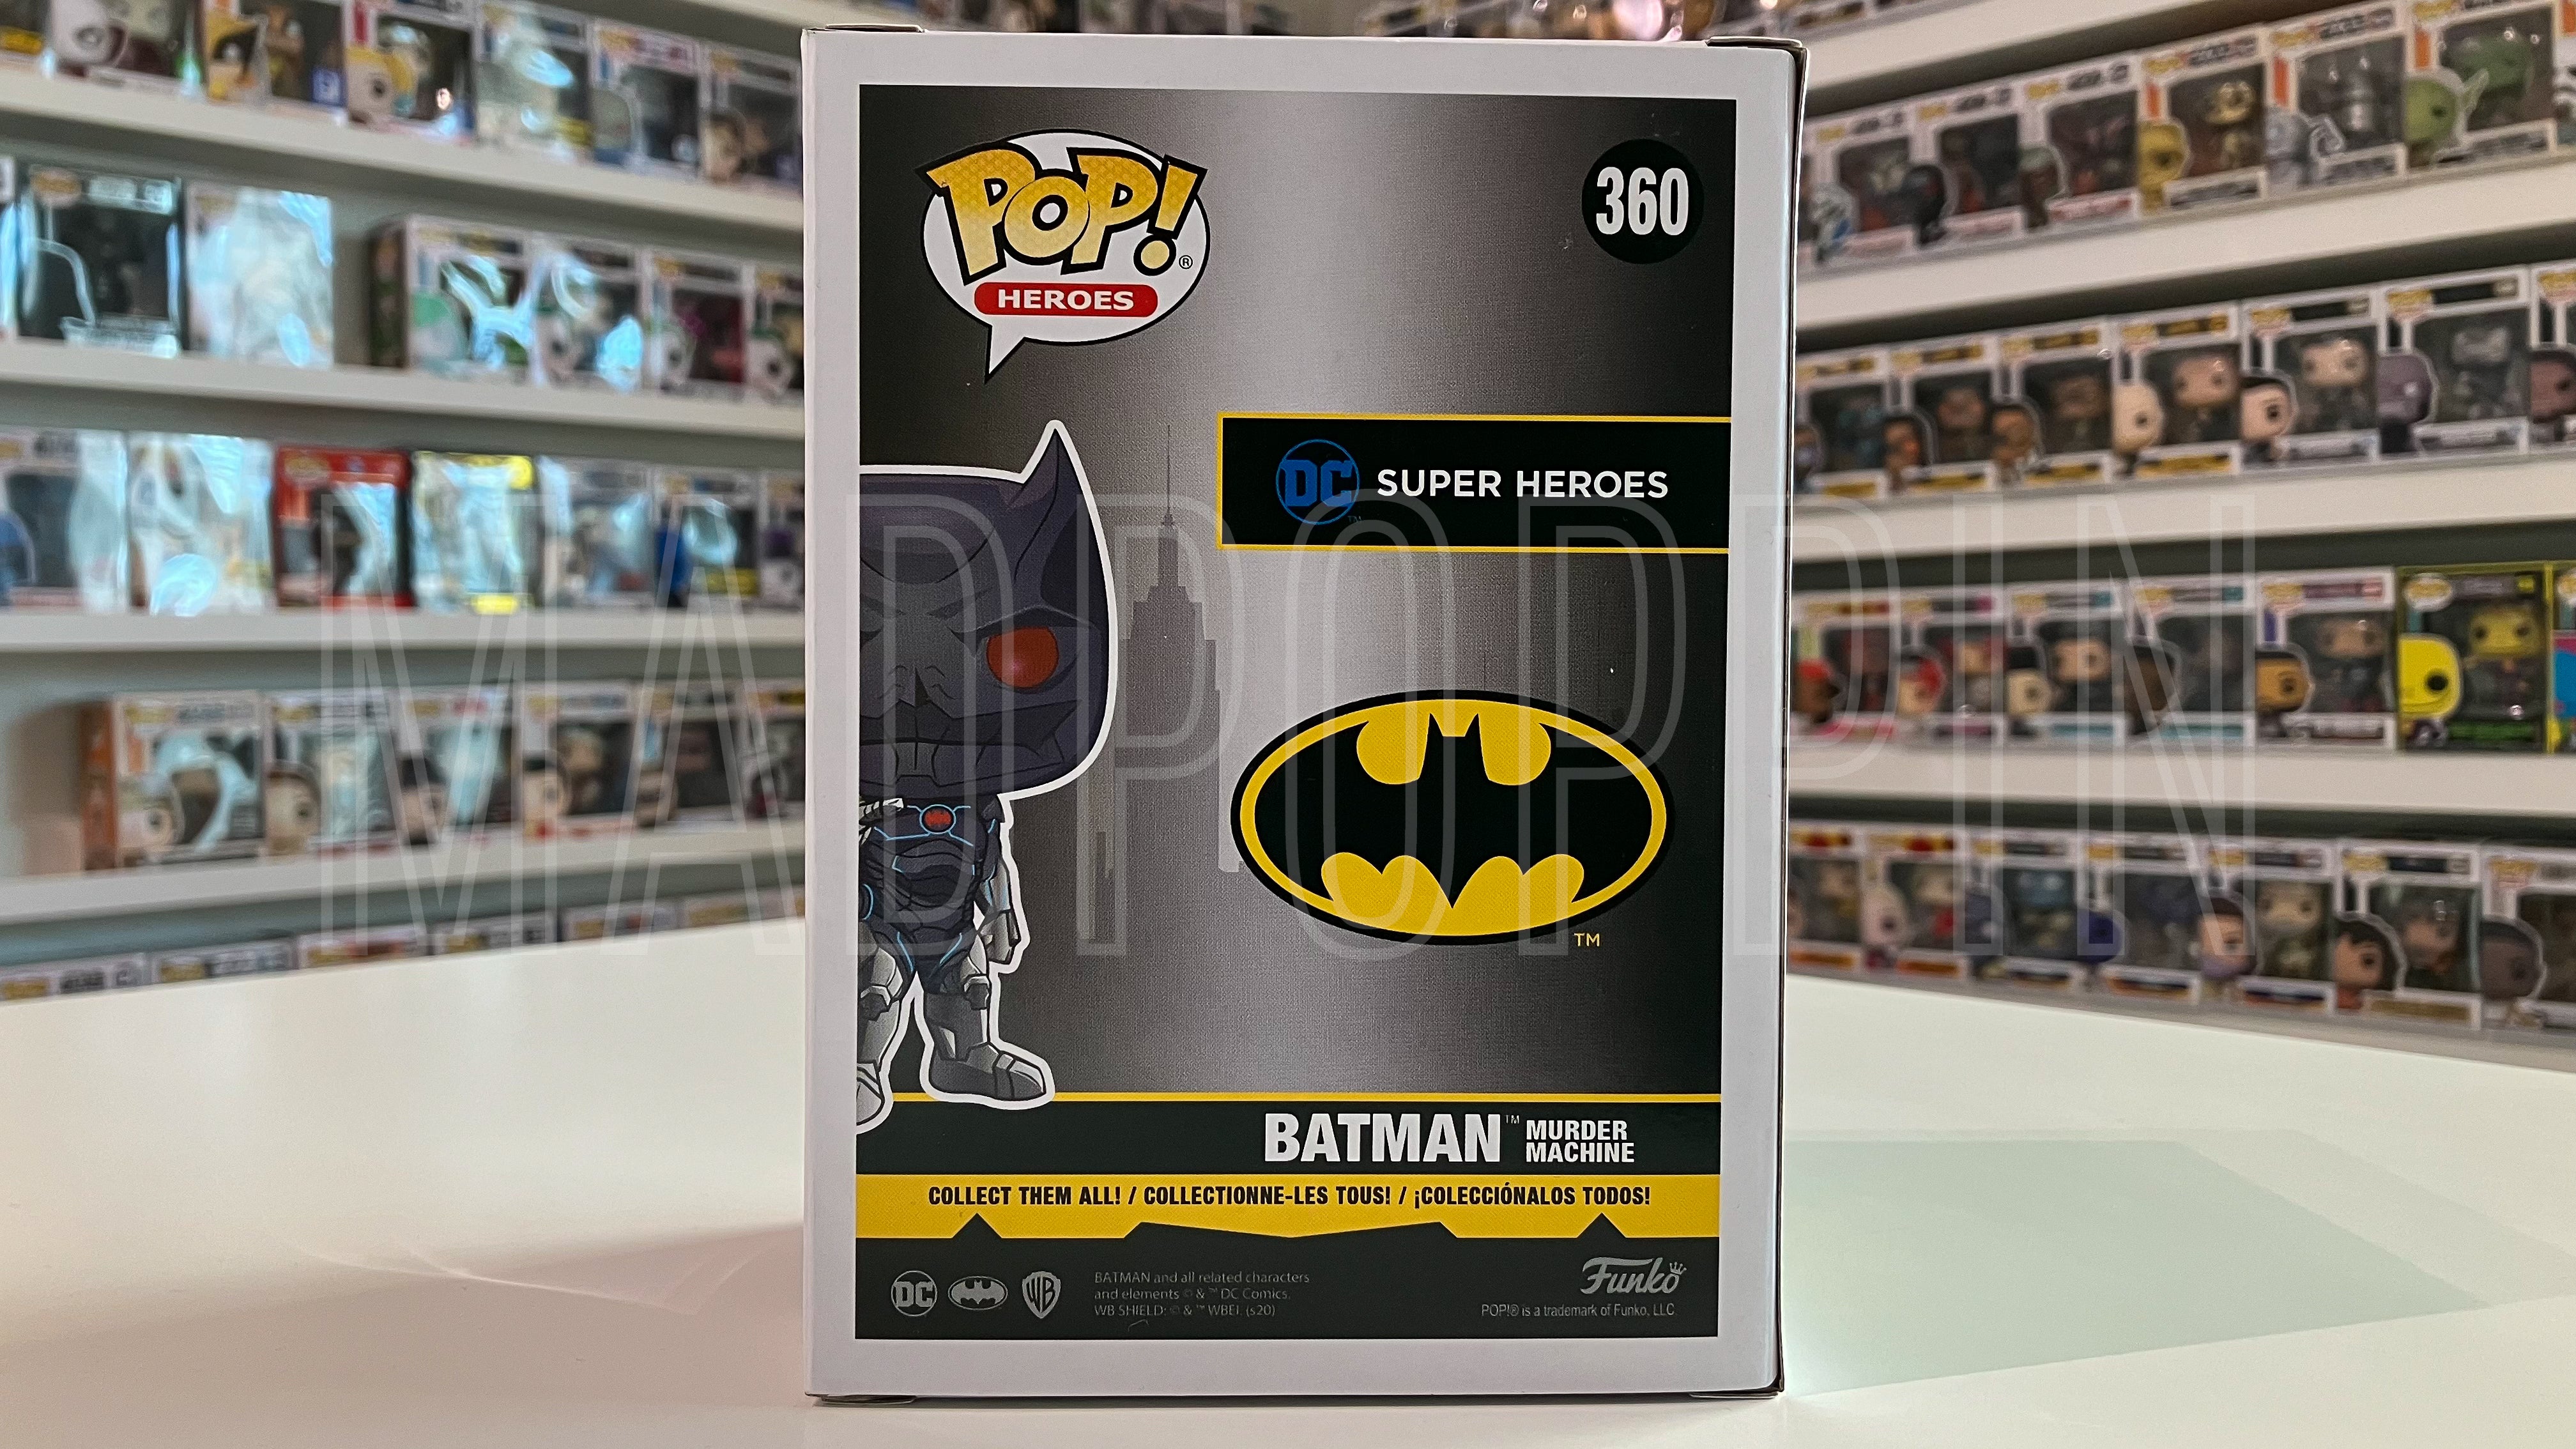 POP! Heroes: DC Super Heroes - Batman Murder Machine (Glow in the Dark)